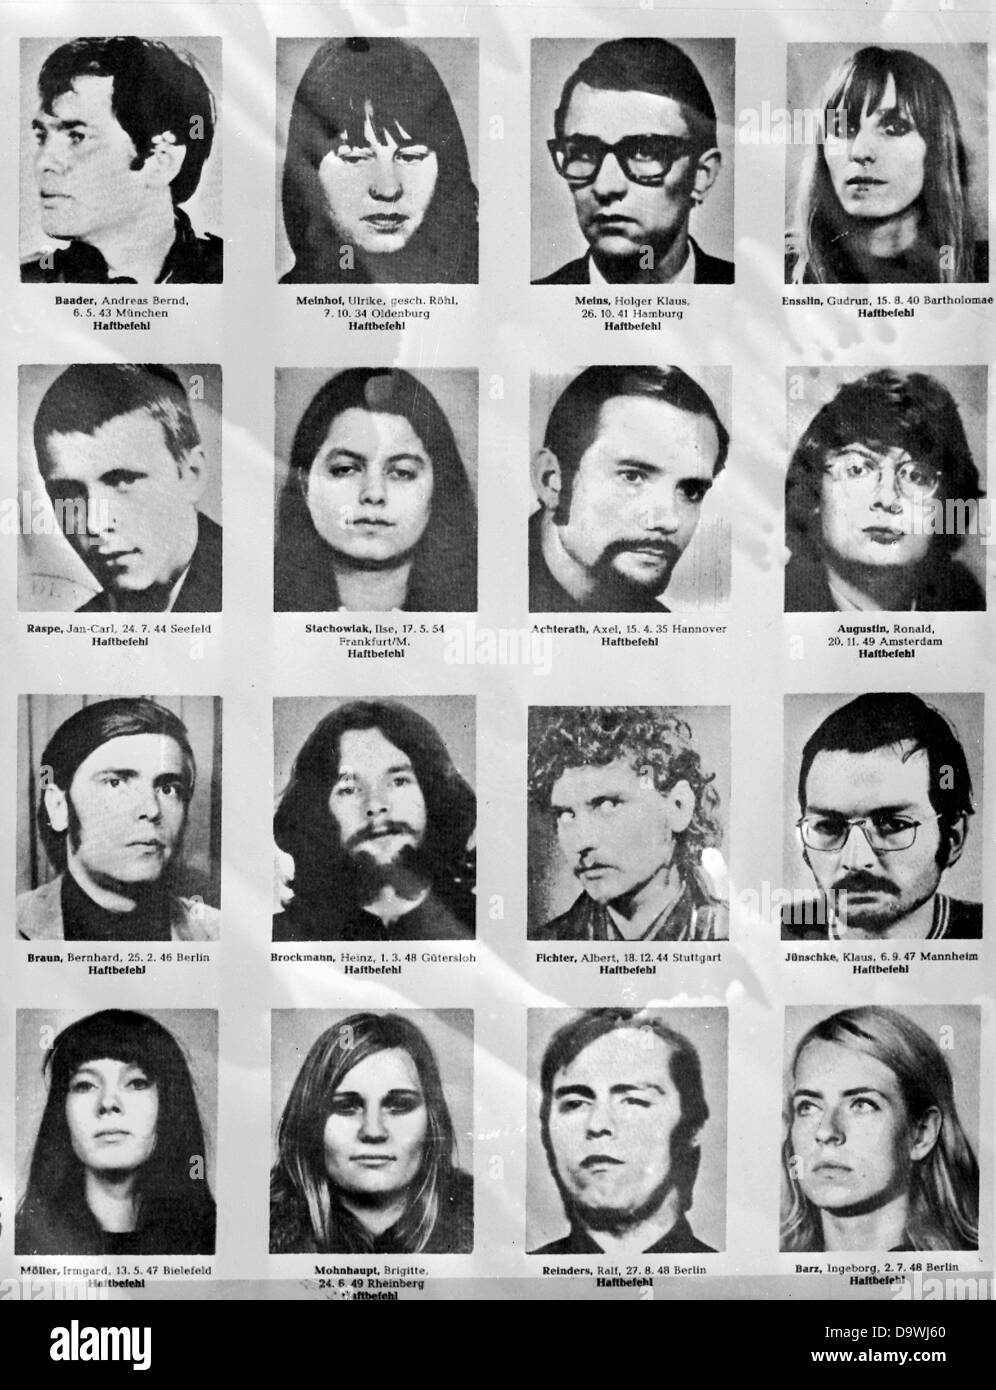 The picture shows the terrorists which are searched for by warrants (upper row, l-r) Andreas Baader, Ulrike Meinhof, Holger Meins, Gudrun Ensslin; (second row, l-r): Jan-Carl Raspe, Ilse Stachowiak, Axel Achterath, Ronald Augustin; (third row, l-r): Bernhard Braun, Heinz Brockmann, Albert Fichter, Klaus Jünschke; (last row, l-r): Irmgard Möller, Brigitte Mohnhaupt, Ralf Reinders, Ingeborg Barz. Stock Photo